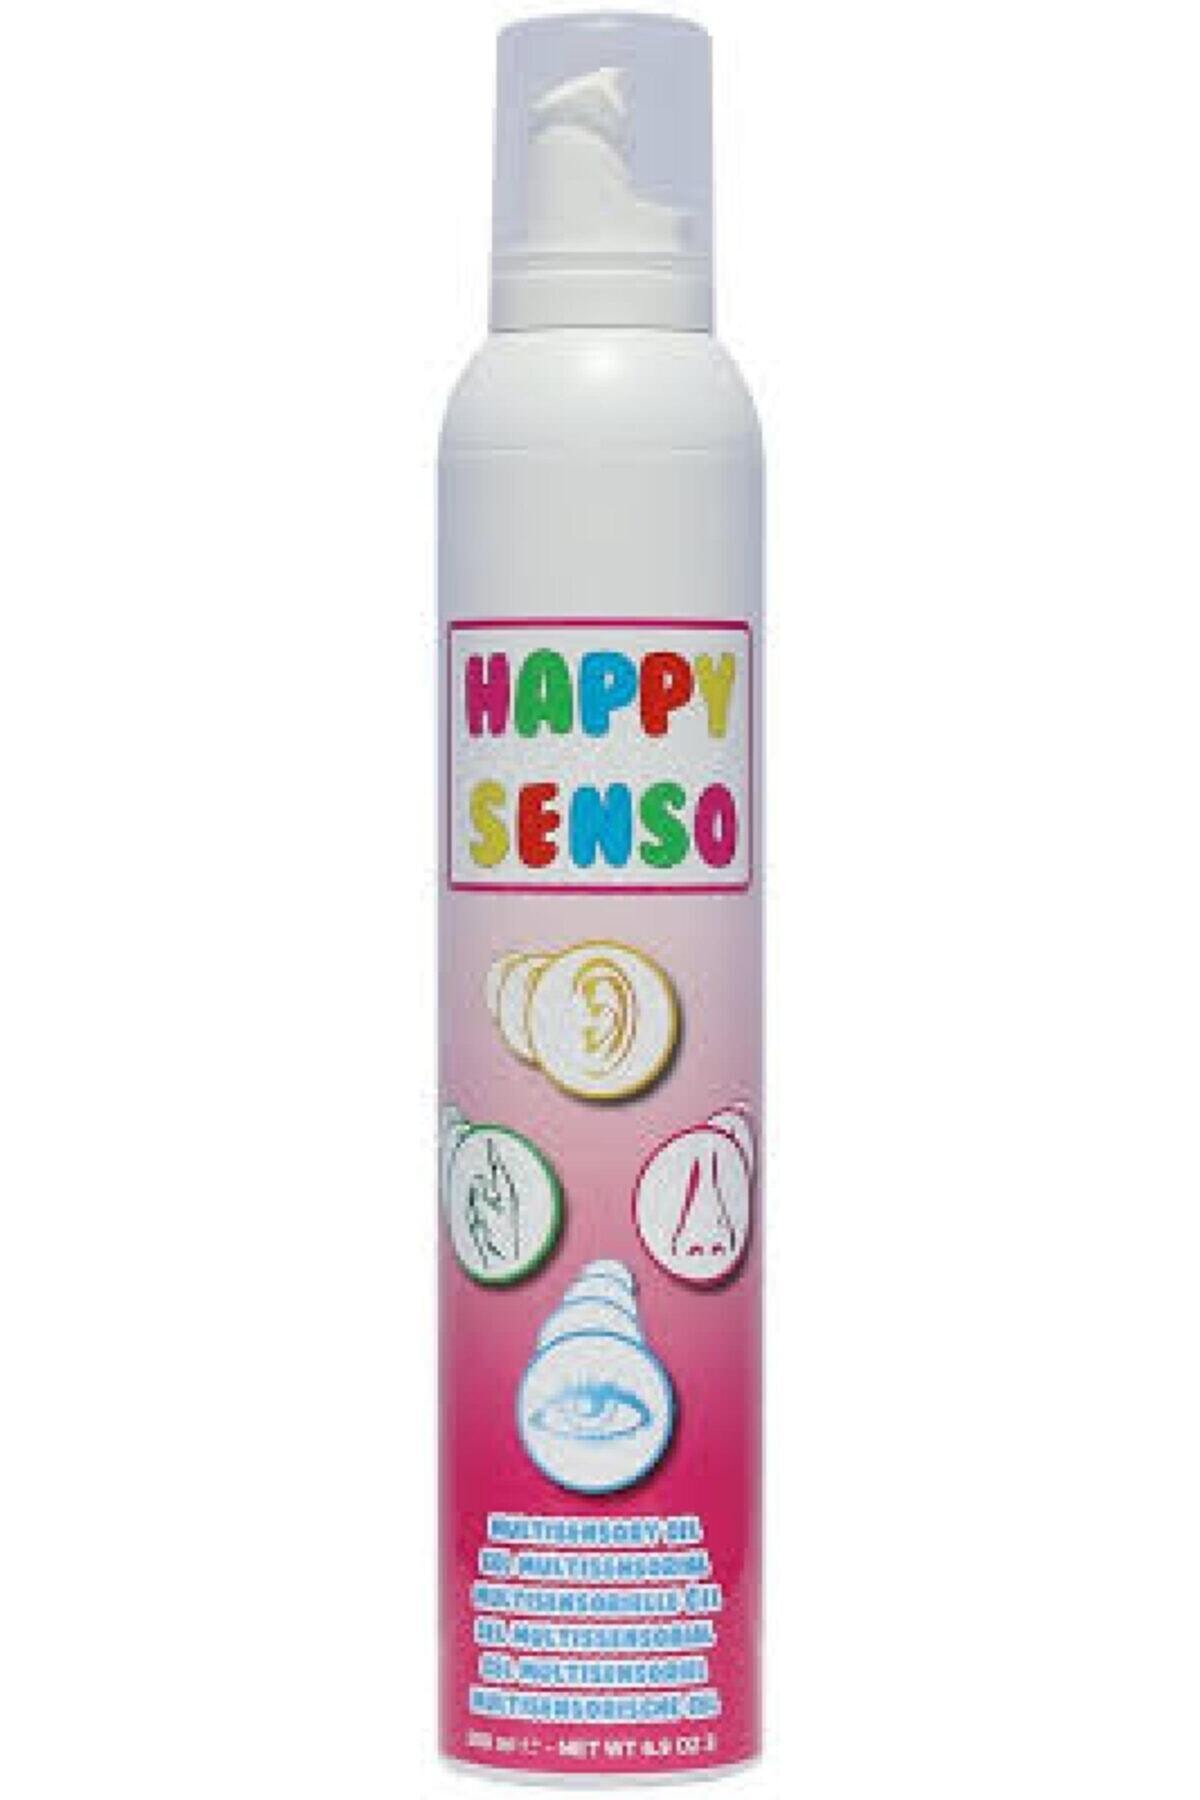 Duyu Atölyesi Happy Senso Terapi Köpüğü - Swetness 1 Adet